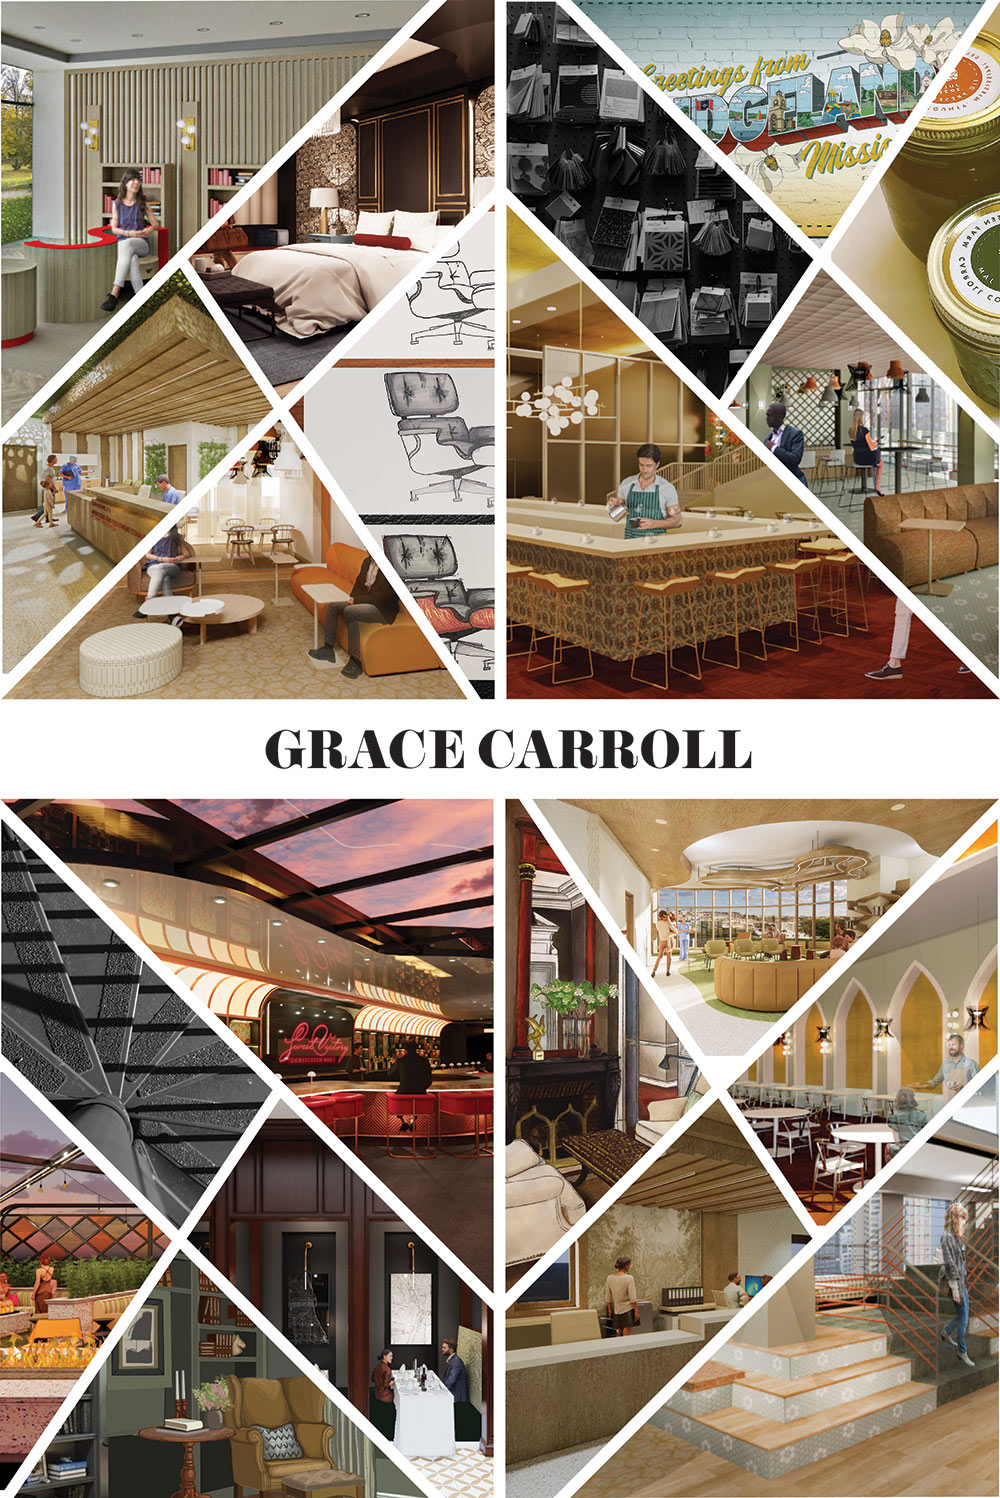 Grace Carroll's interior design senior exhibit boards